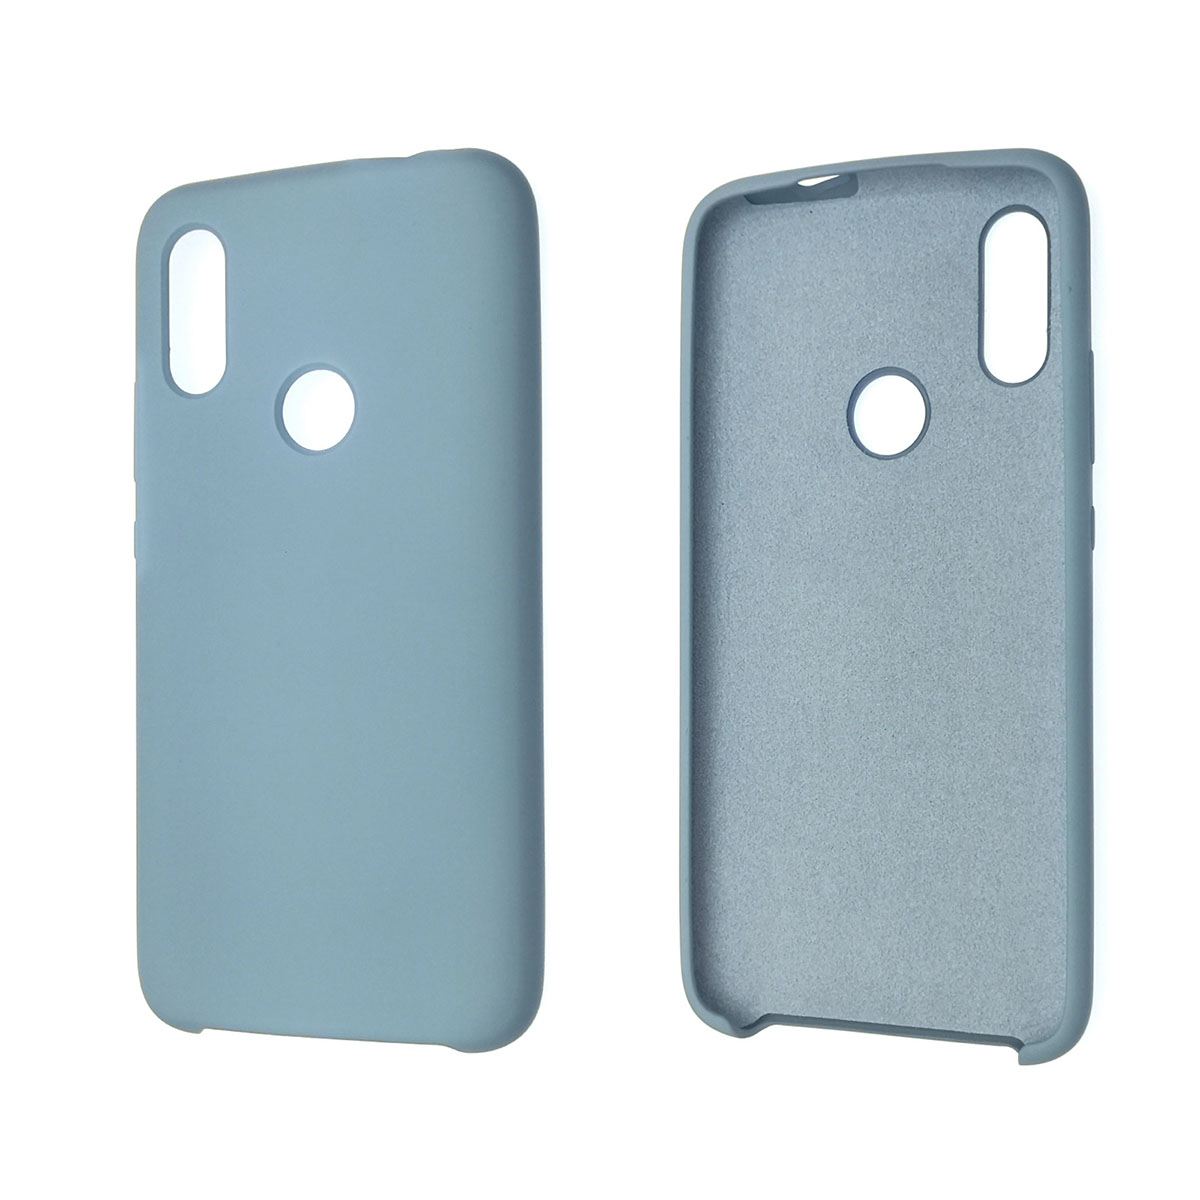 Чехол накладка Silicon Cover для XIAOMI Redmi 7, силикон, бархат, цвет голубой